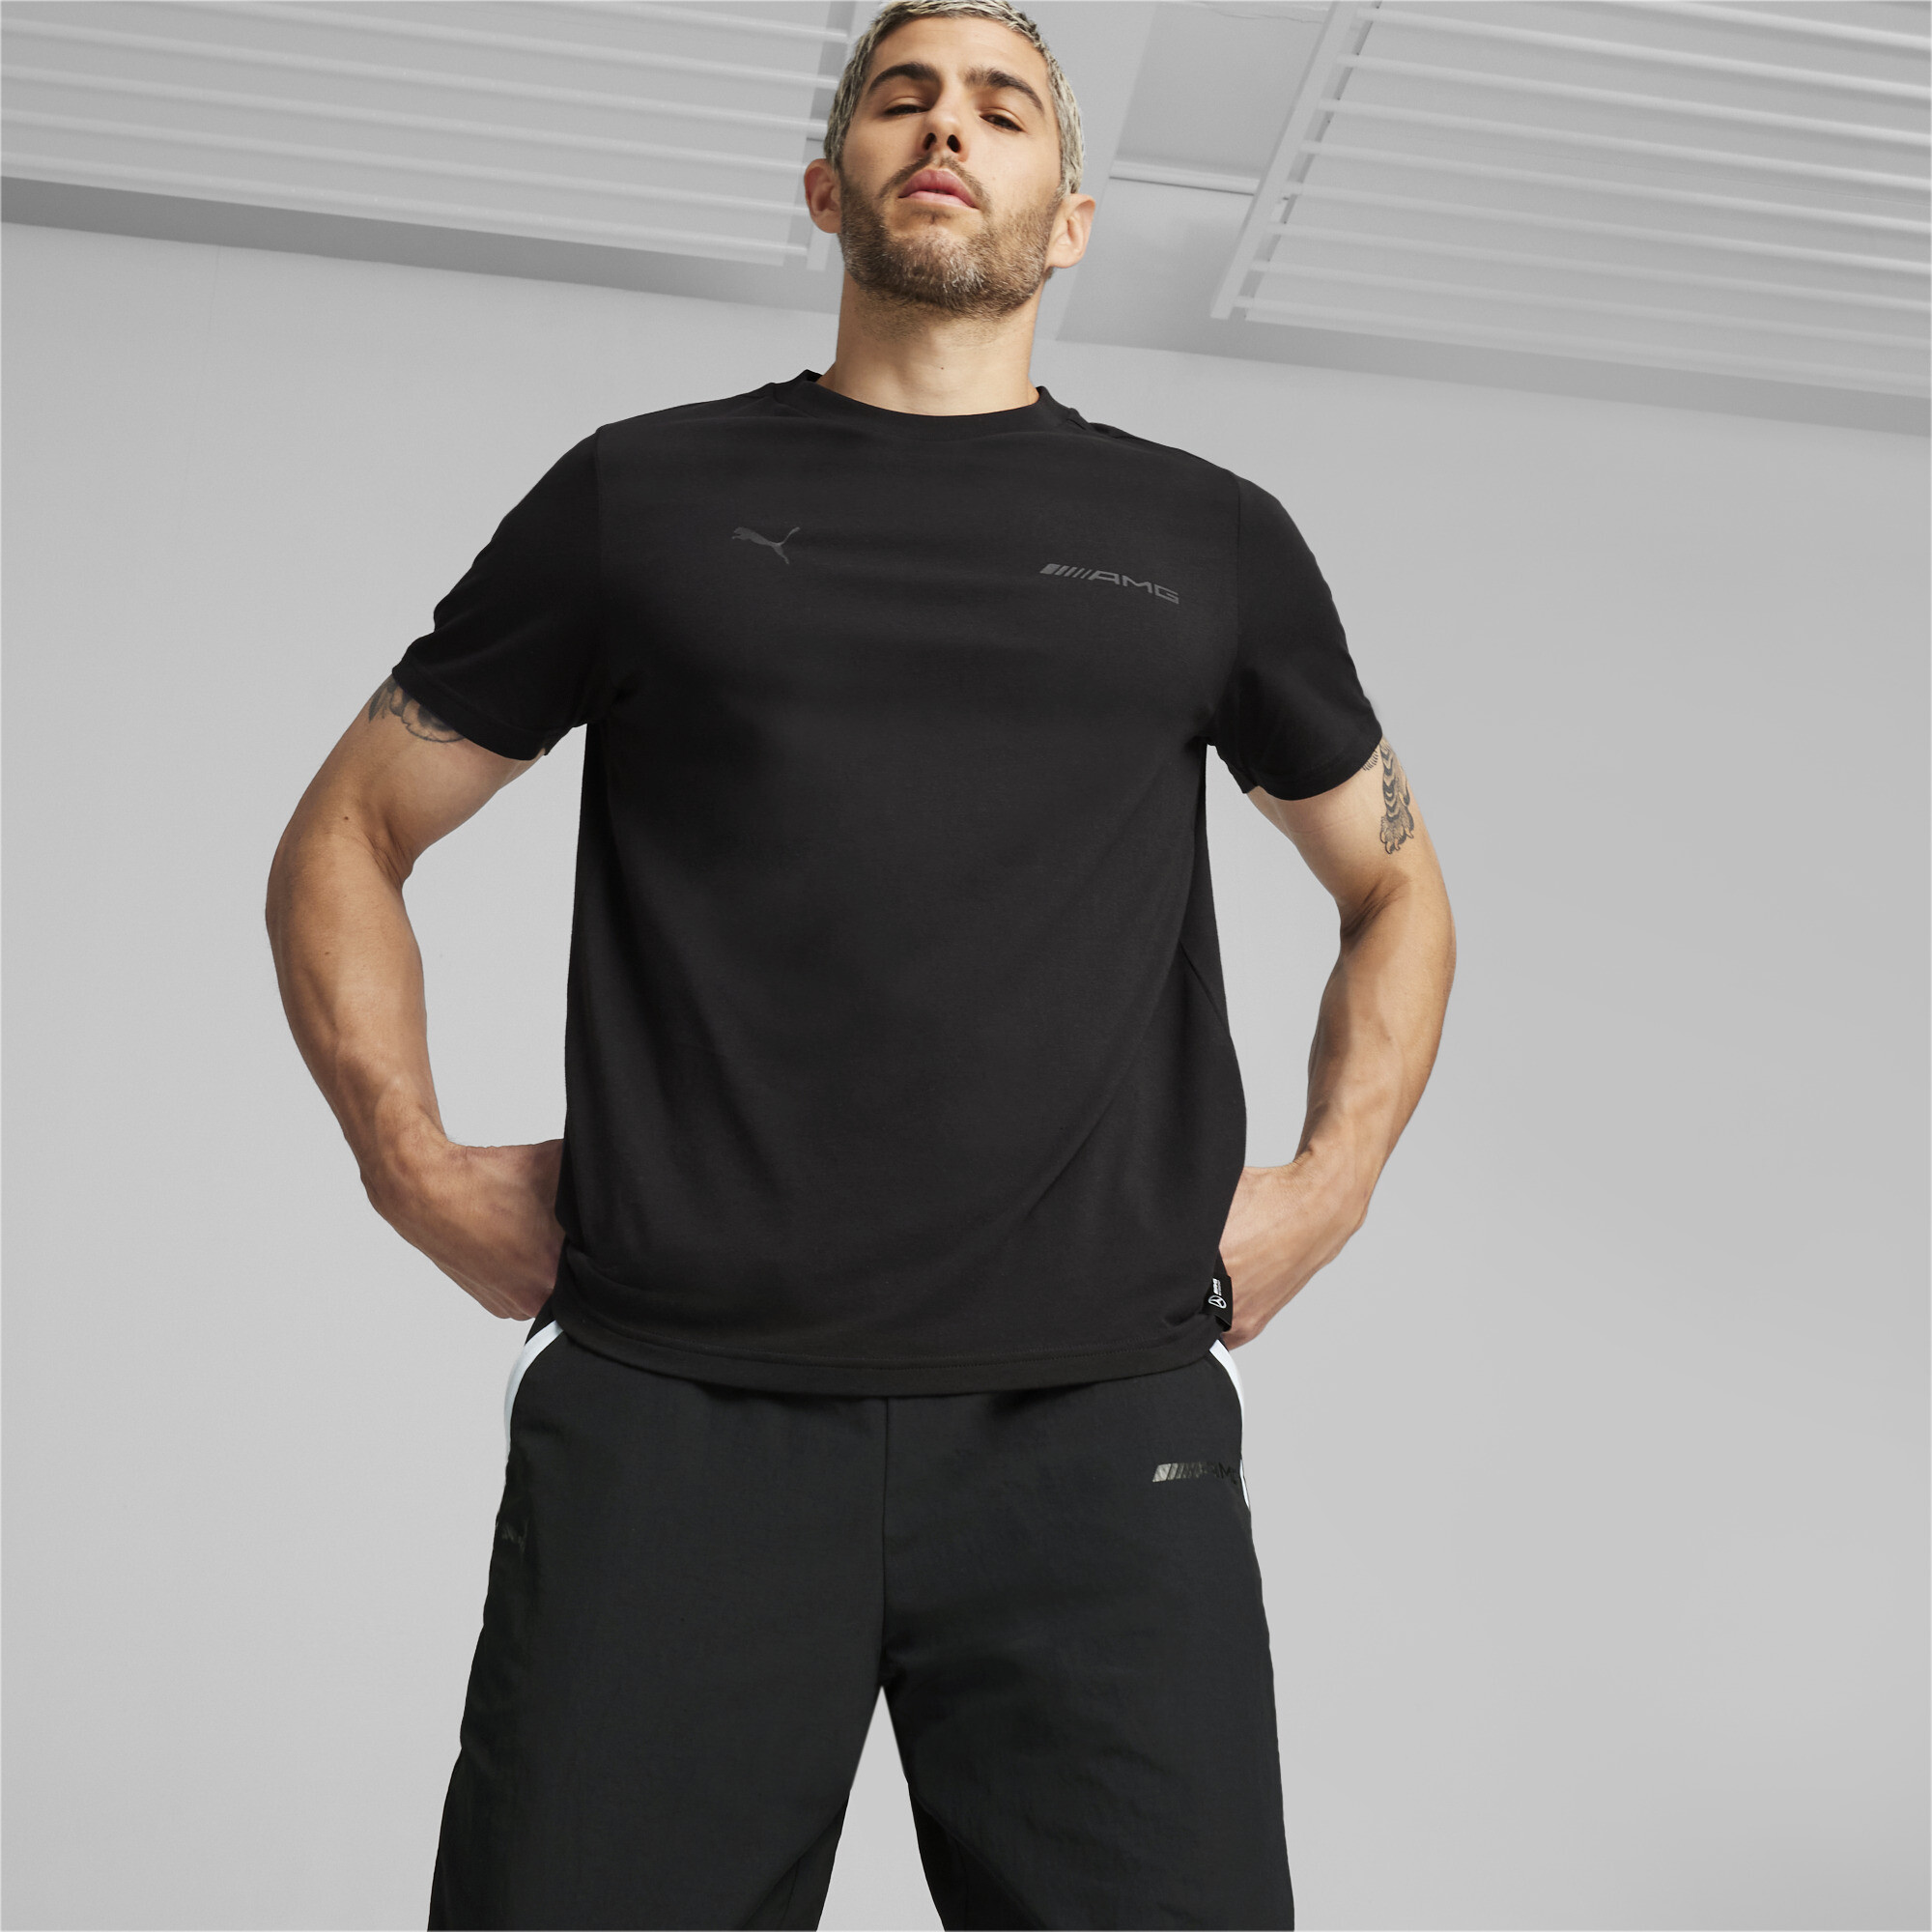 Men's Puma AMG Motorsports Graphic T-Shirt, Black, Size M, Clothing